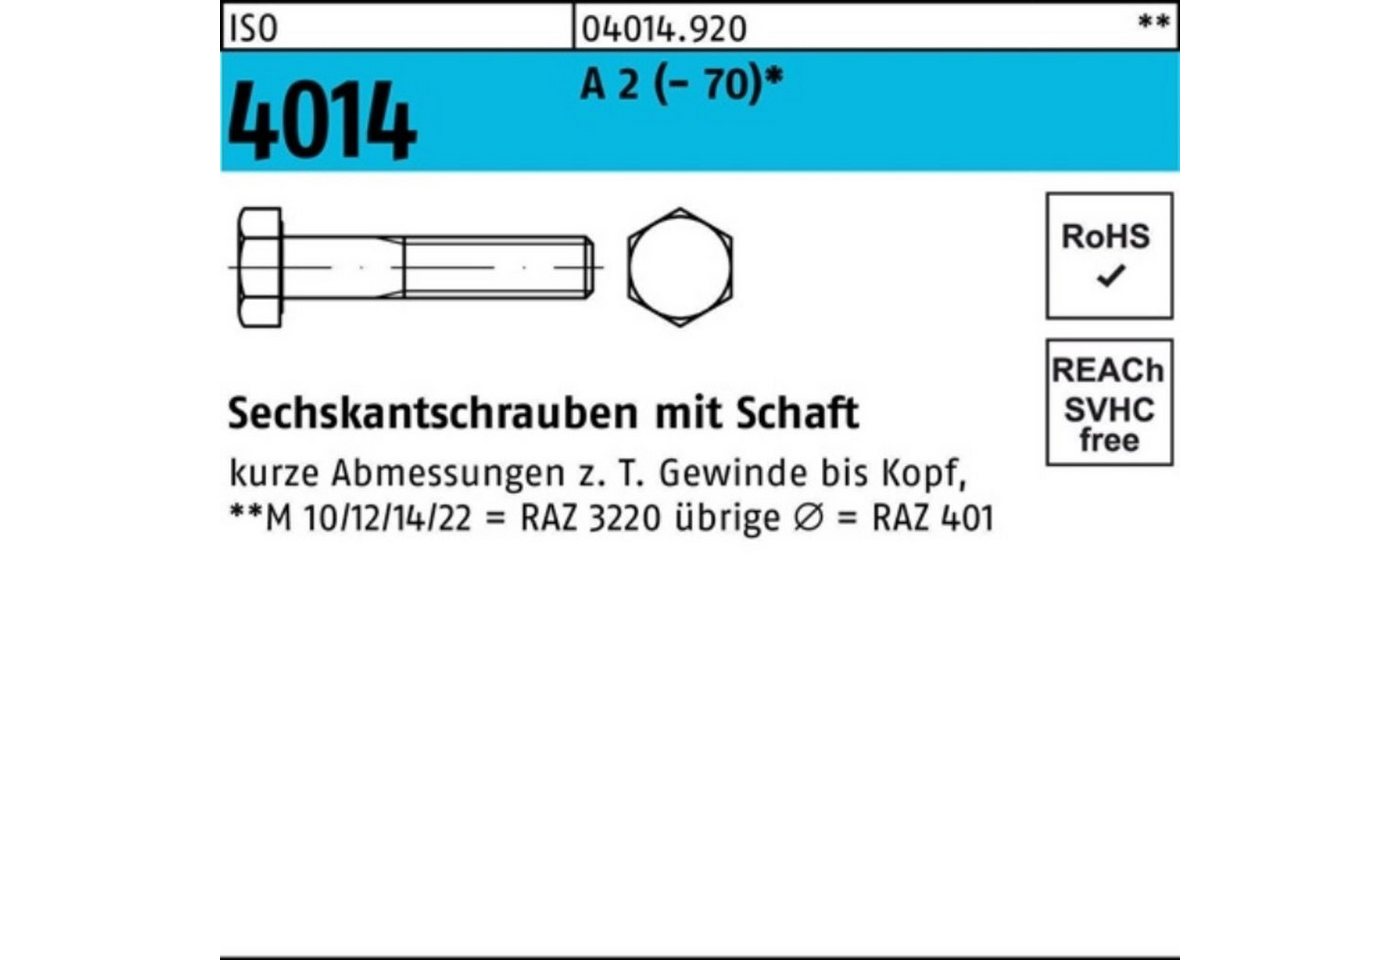 Bufab Sechskantschraube 100er Pack Sechskantschraube ISO 4014 Schaft M6x 45 A 2 (70) 100 St von Bufab